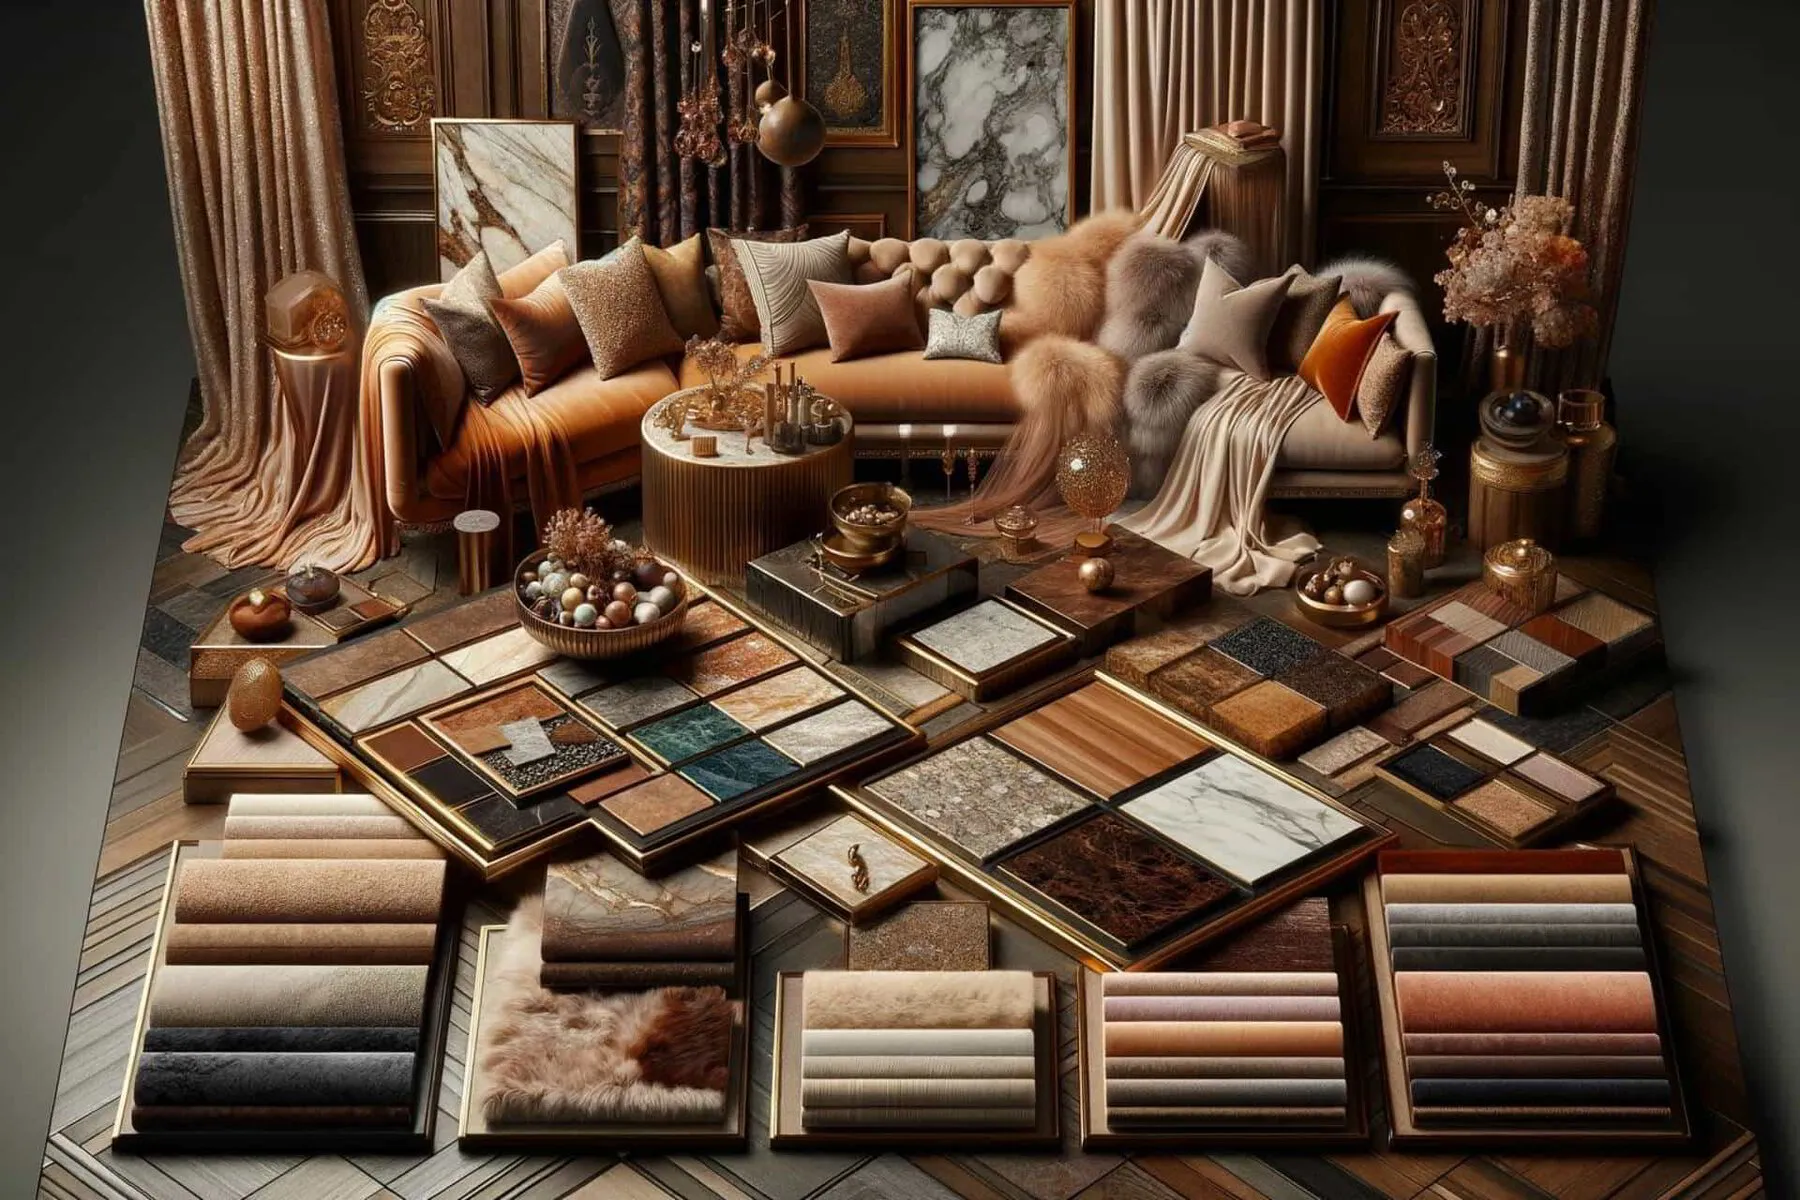  lavish, artistic representation of selecting high-end materials for luxury interior design. 